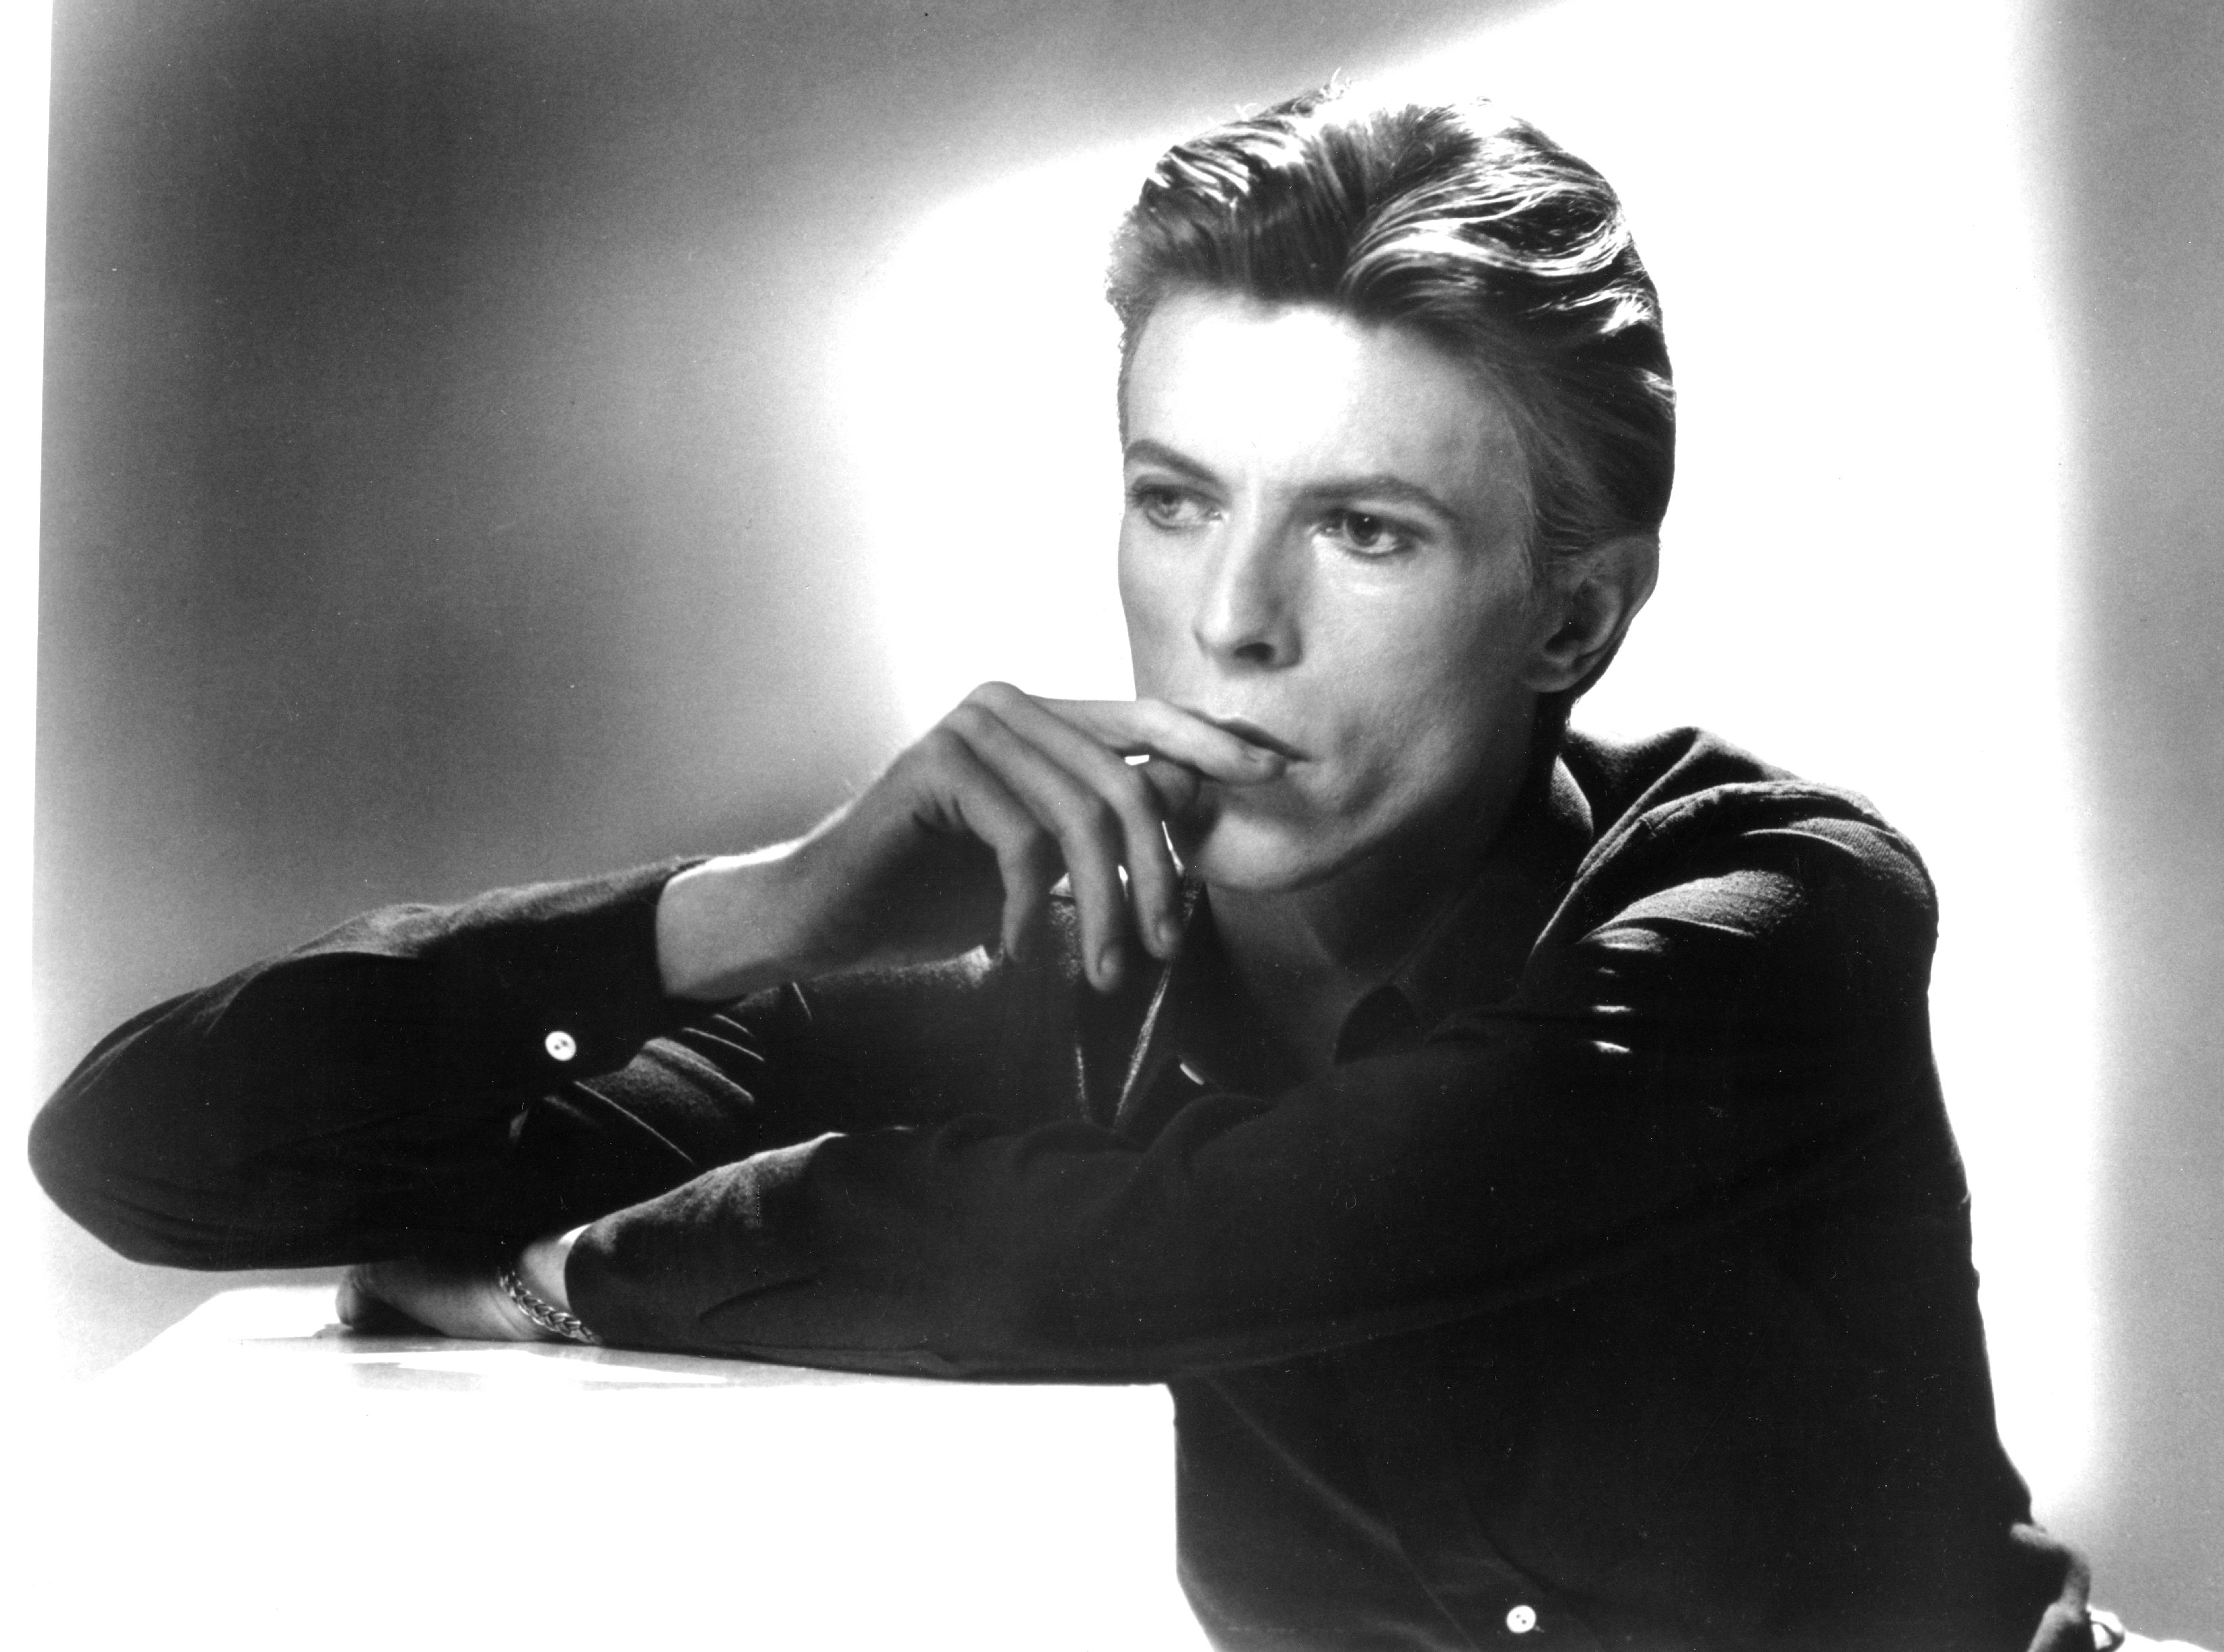 David Bowie wearing a long-sleeved shirt